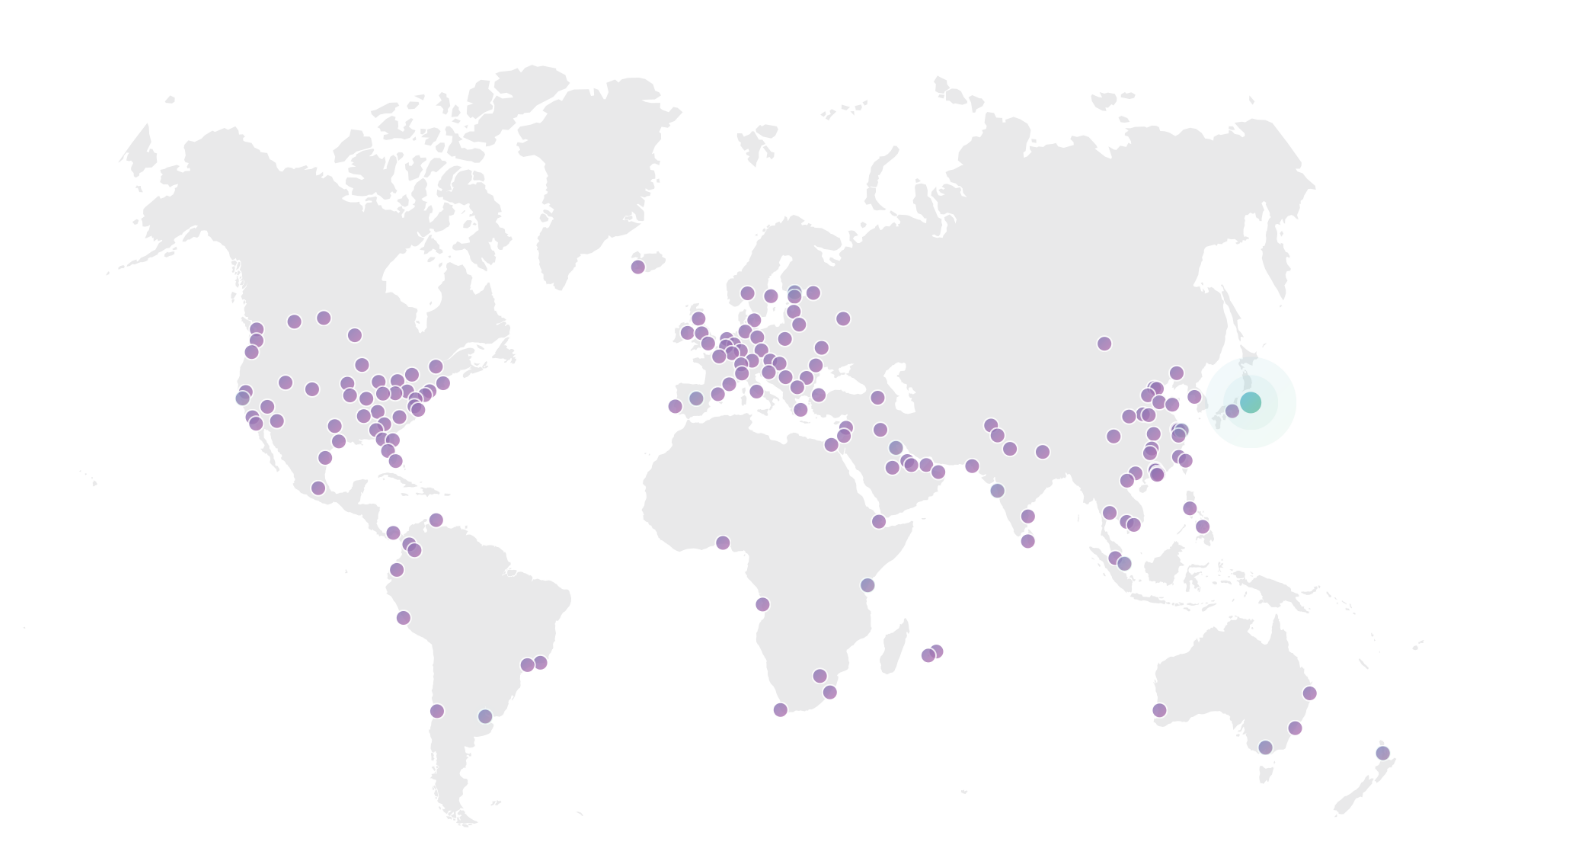 Distribution of CDN_Abroad nodes